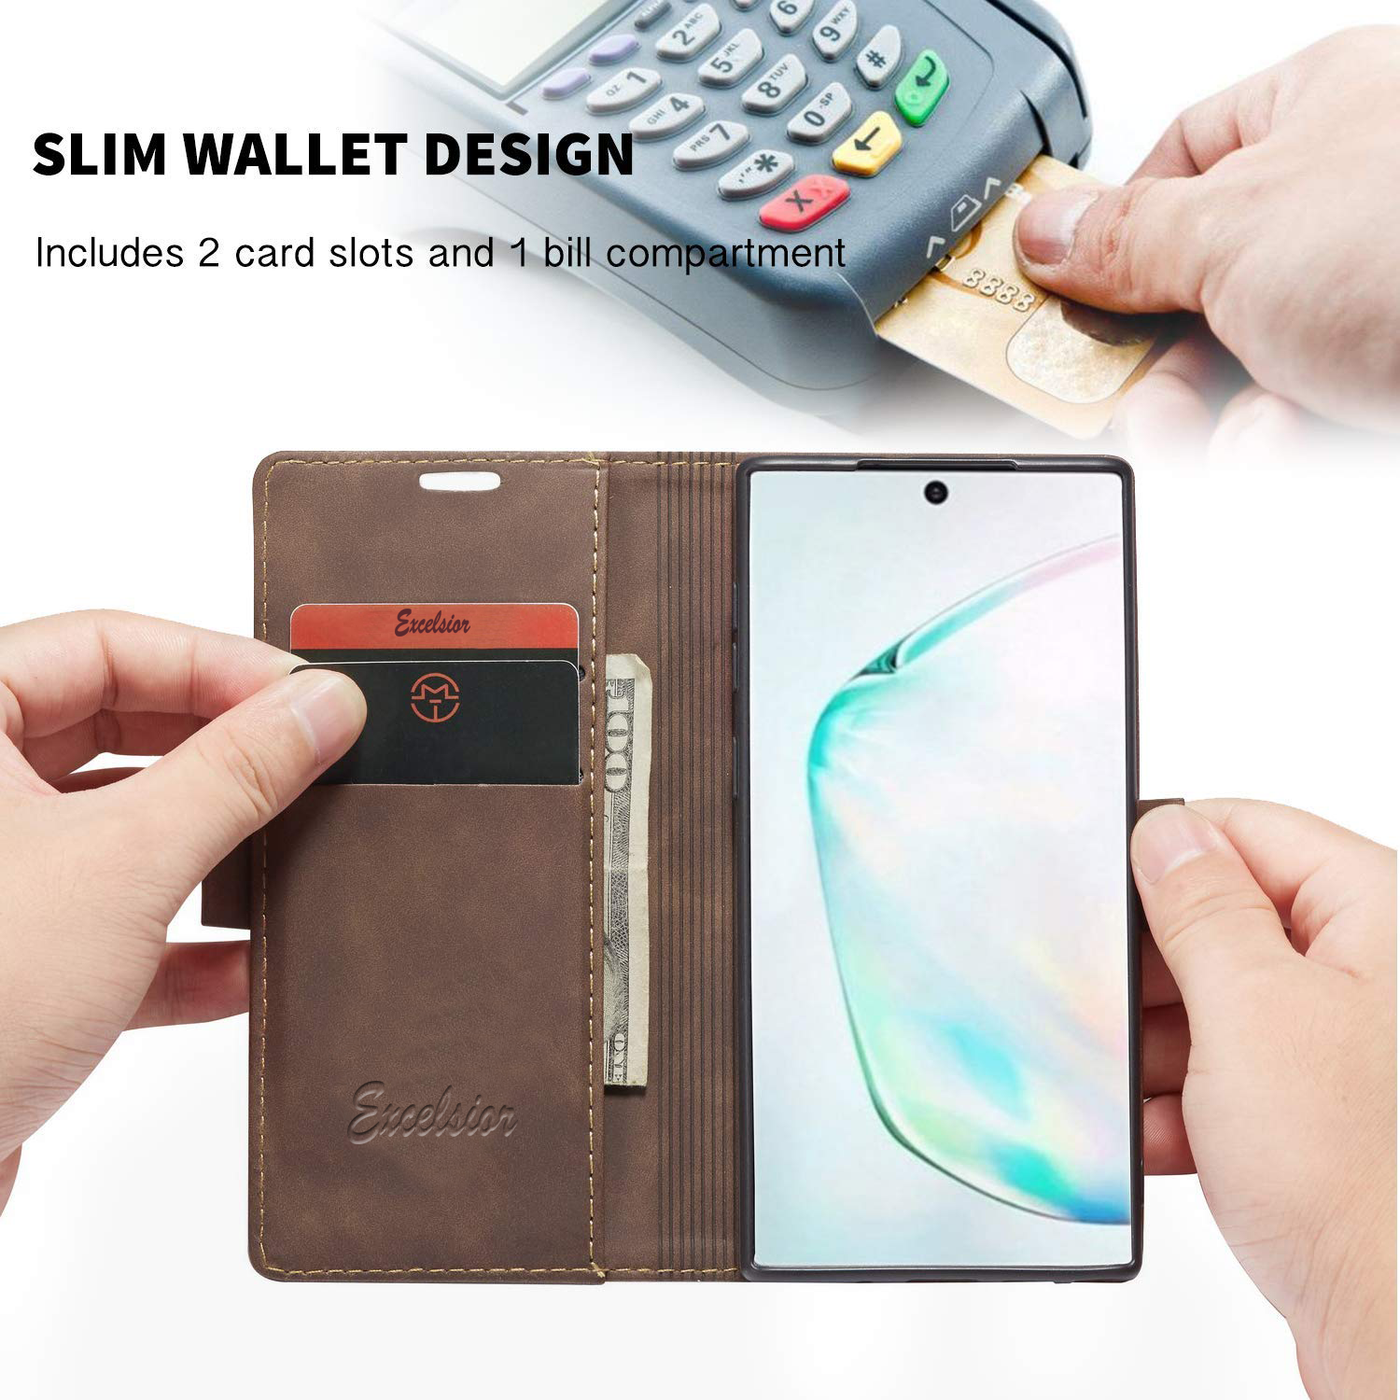 Samsung note 10 plus slim wallet design wallet flip case cover